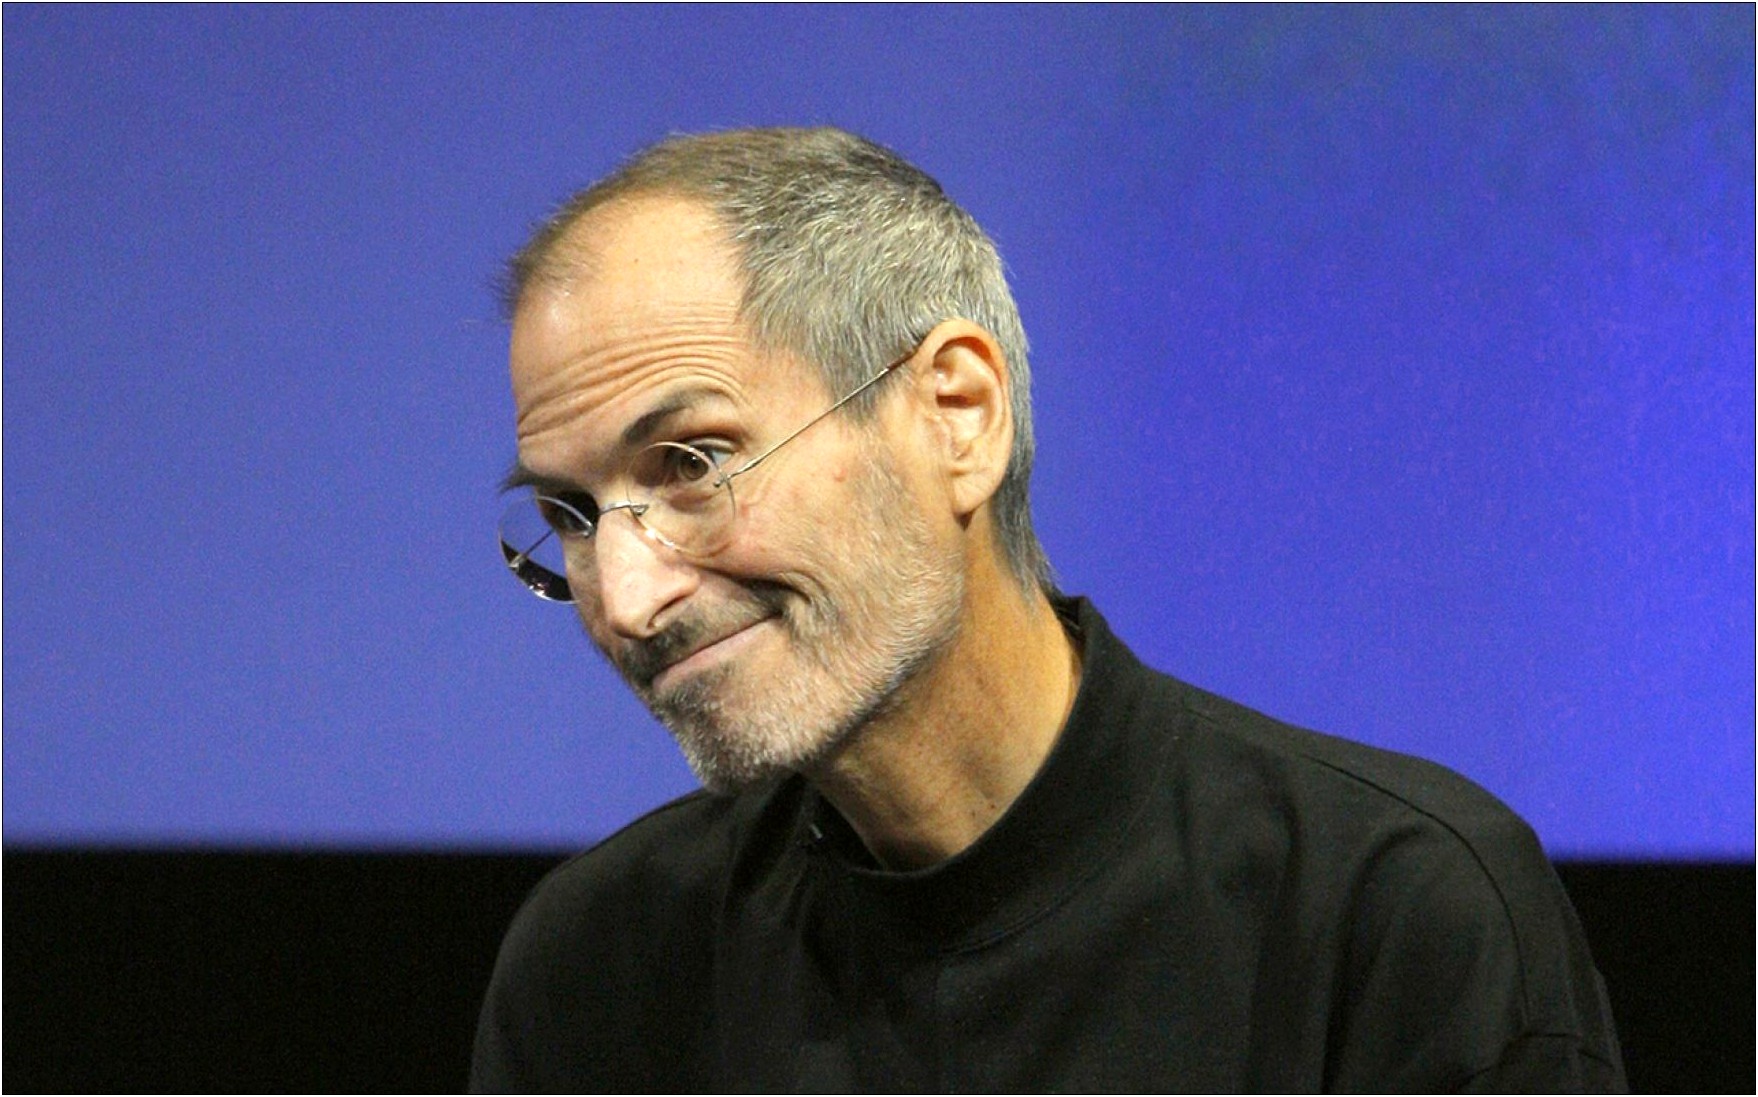 Quien Fue Steve Jobs Resumen Corto